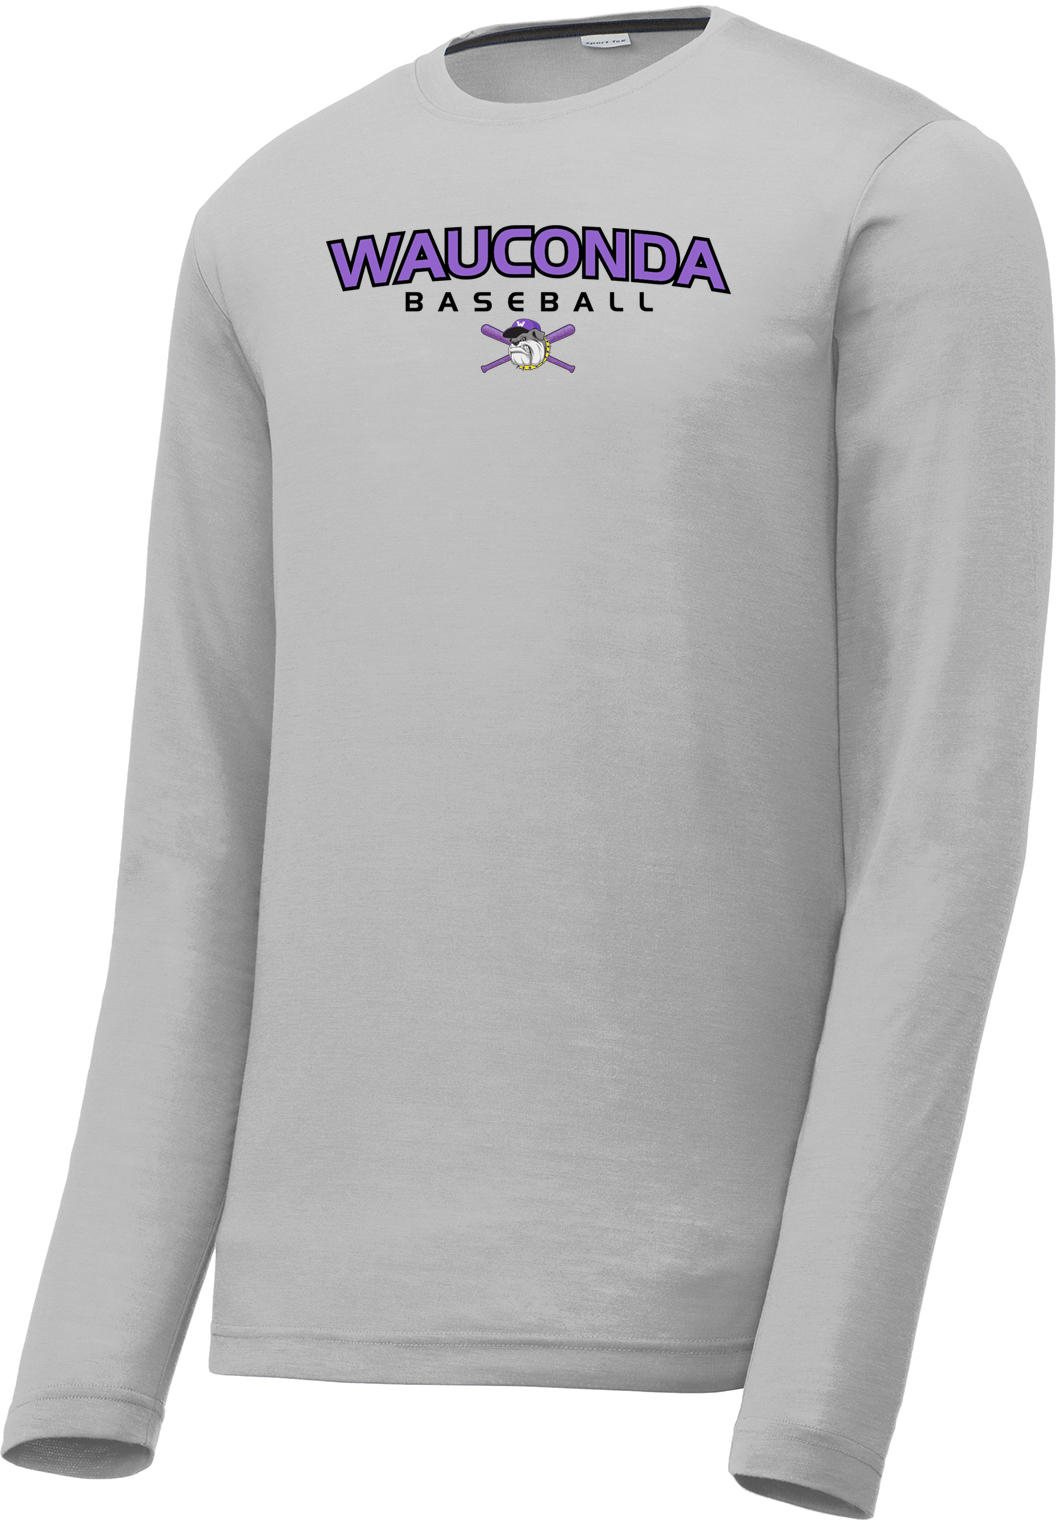 Wauconda Baseball Long Sleeve CottonTouch Performance Shirt